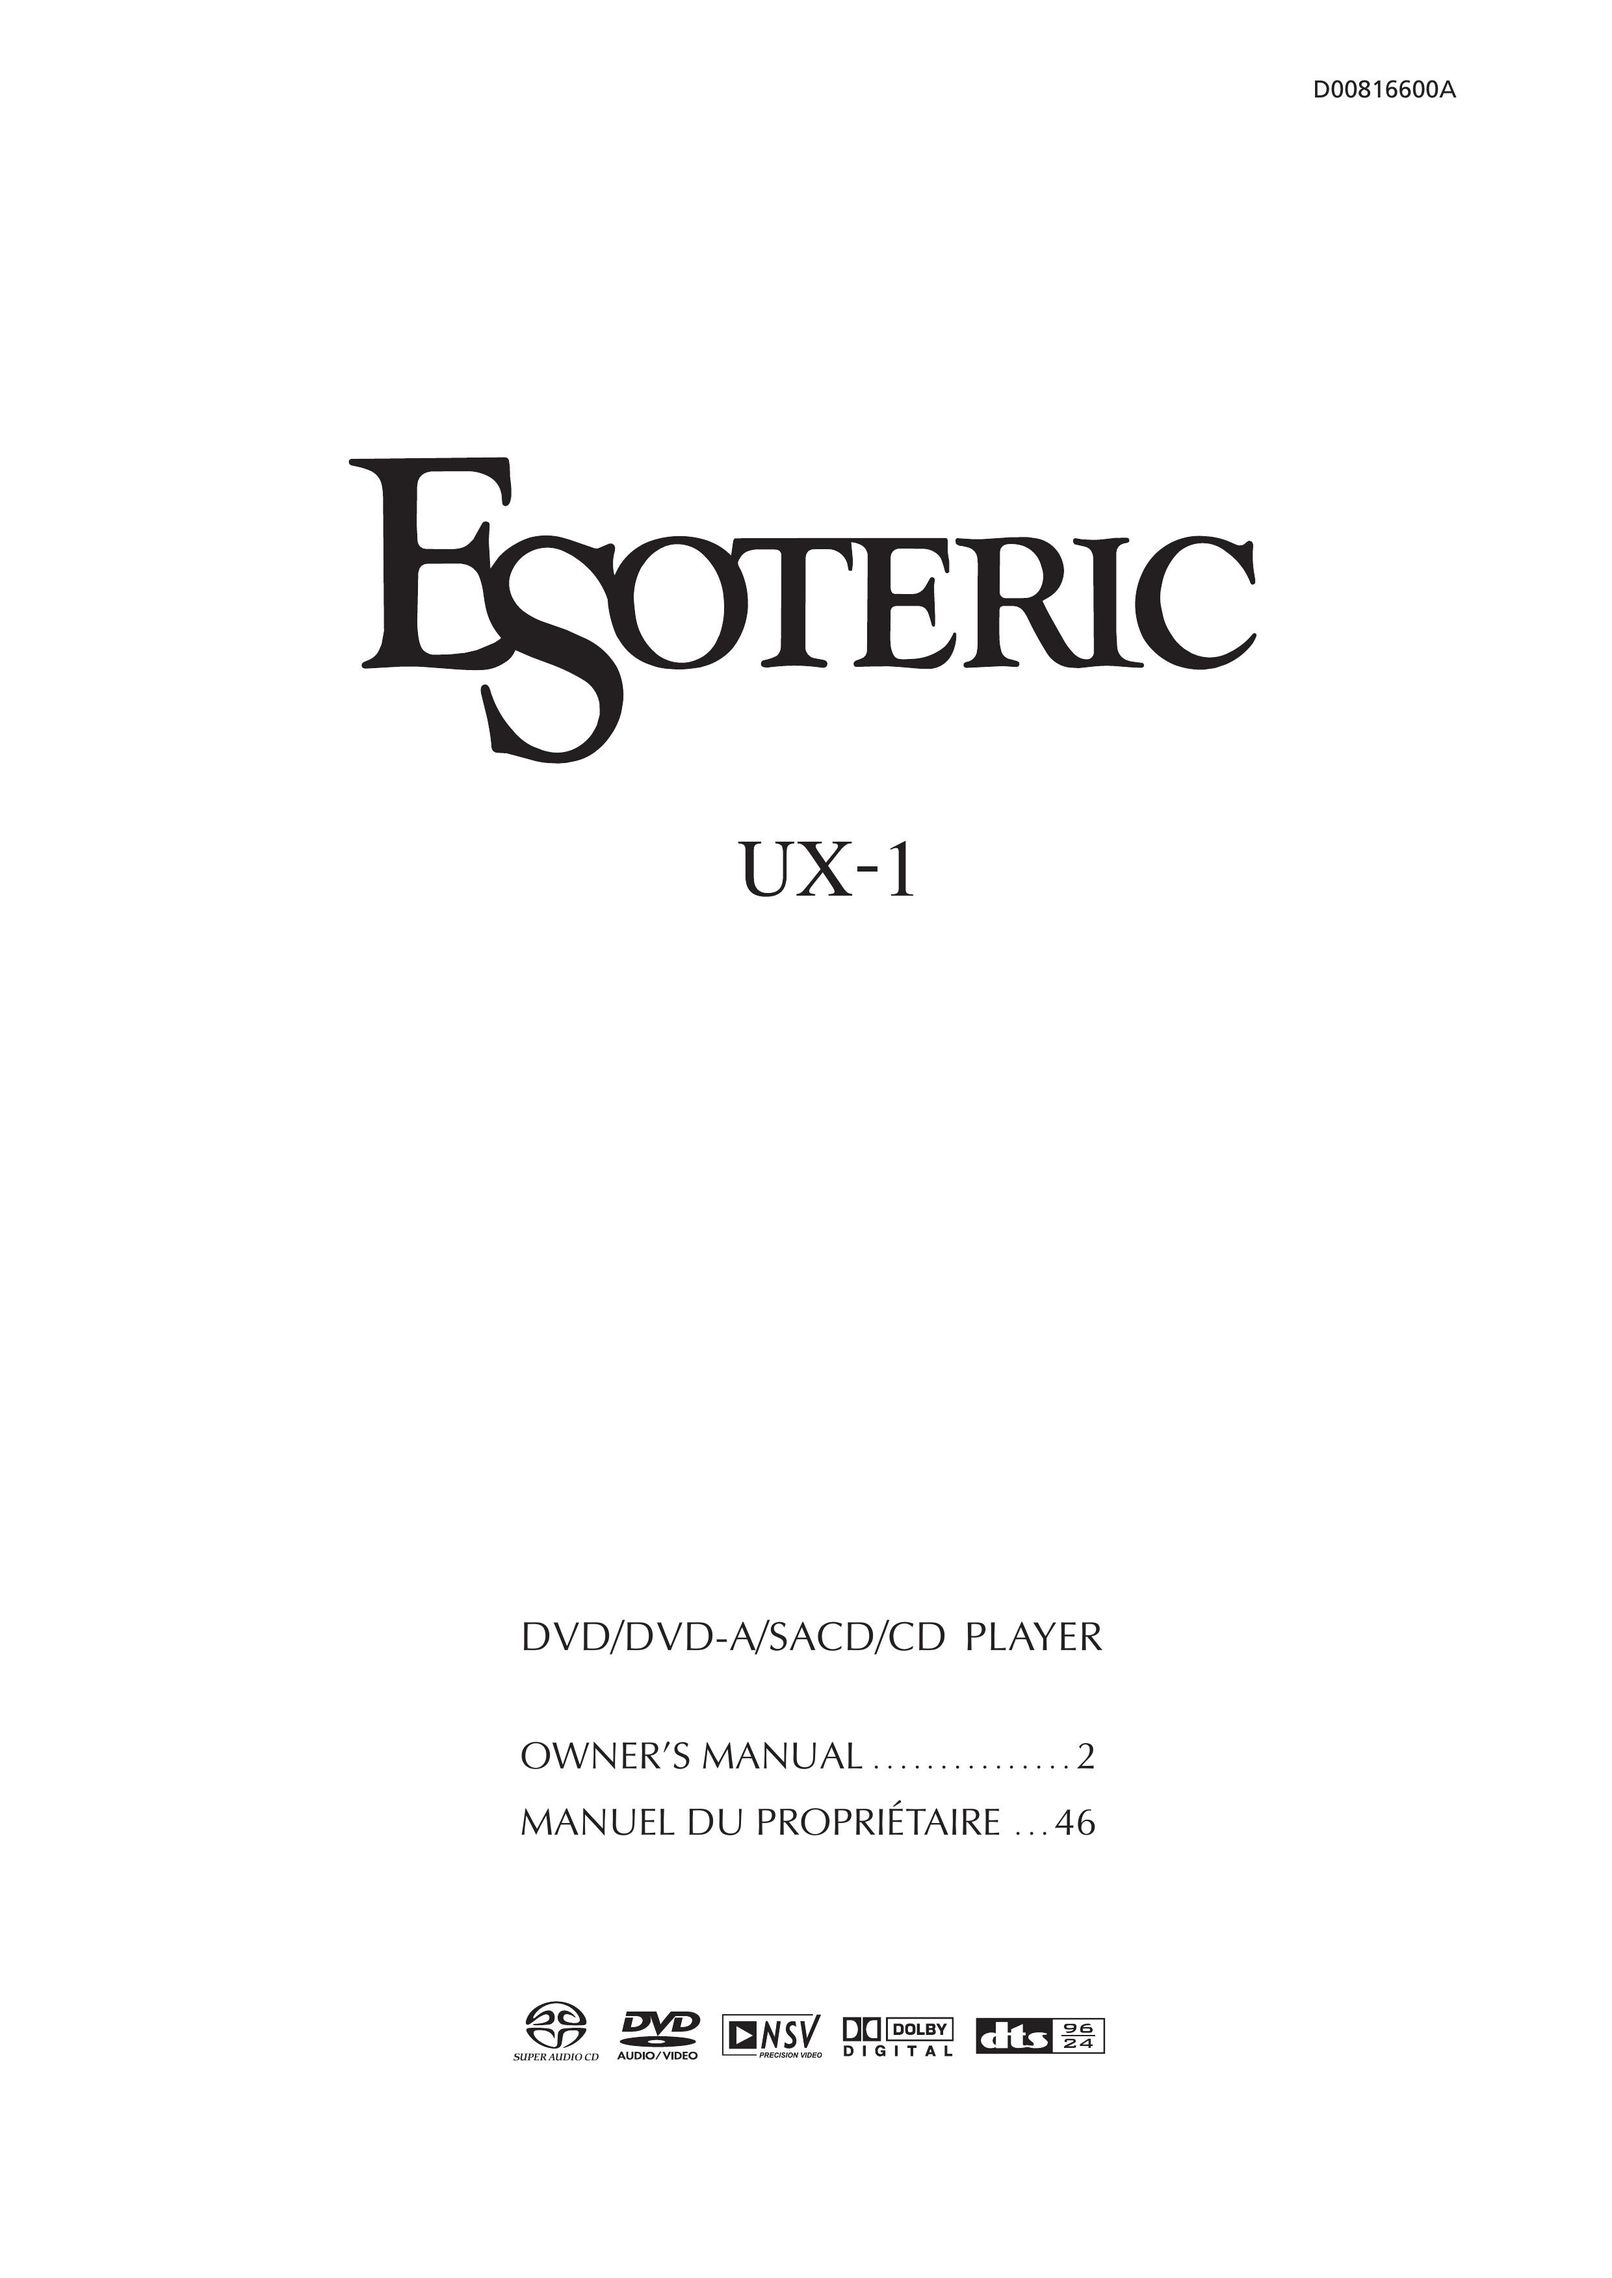 Esoteric D00816600A DVD Player User Manual